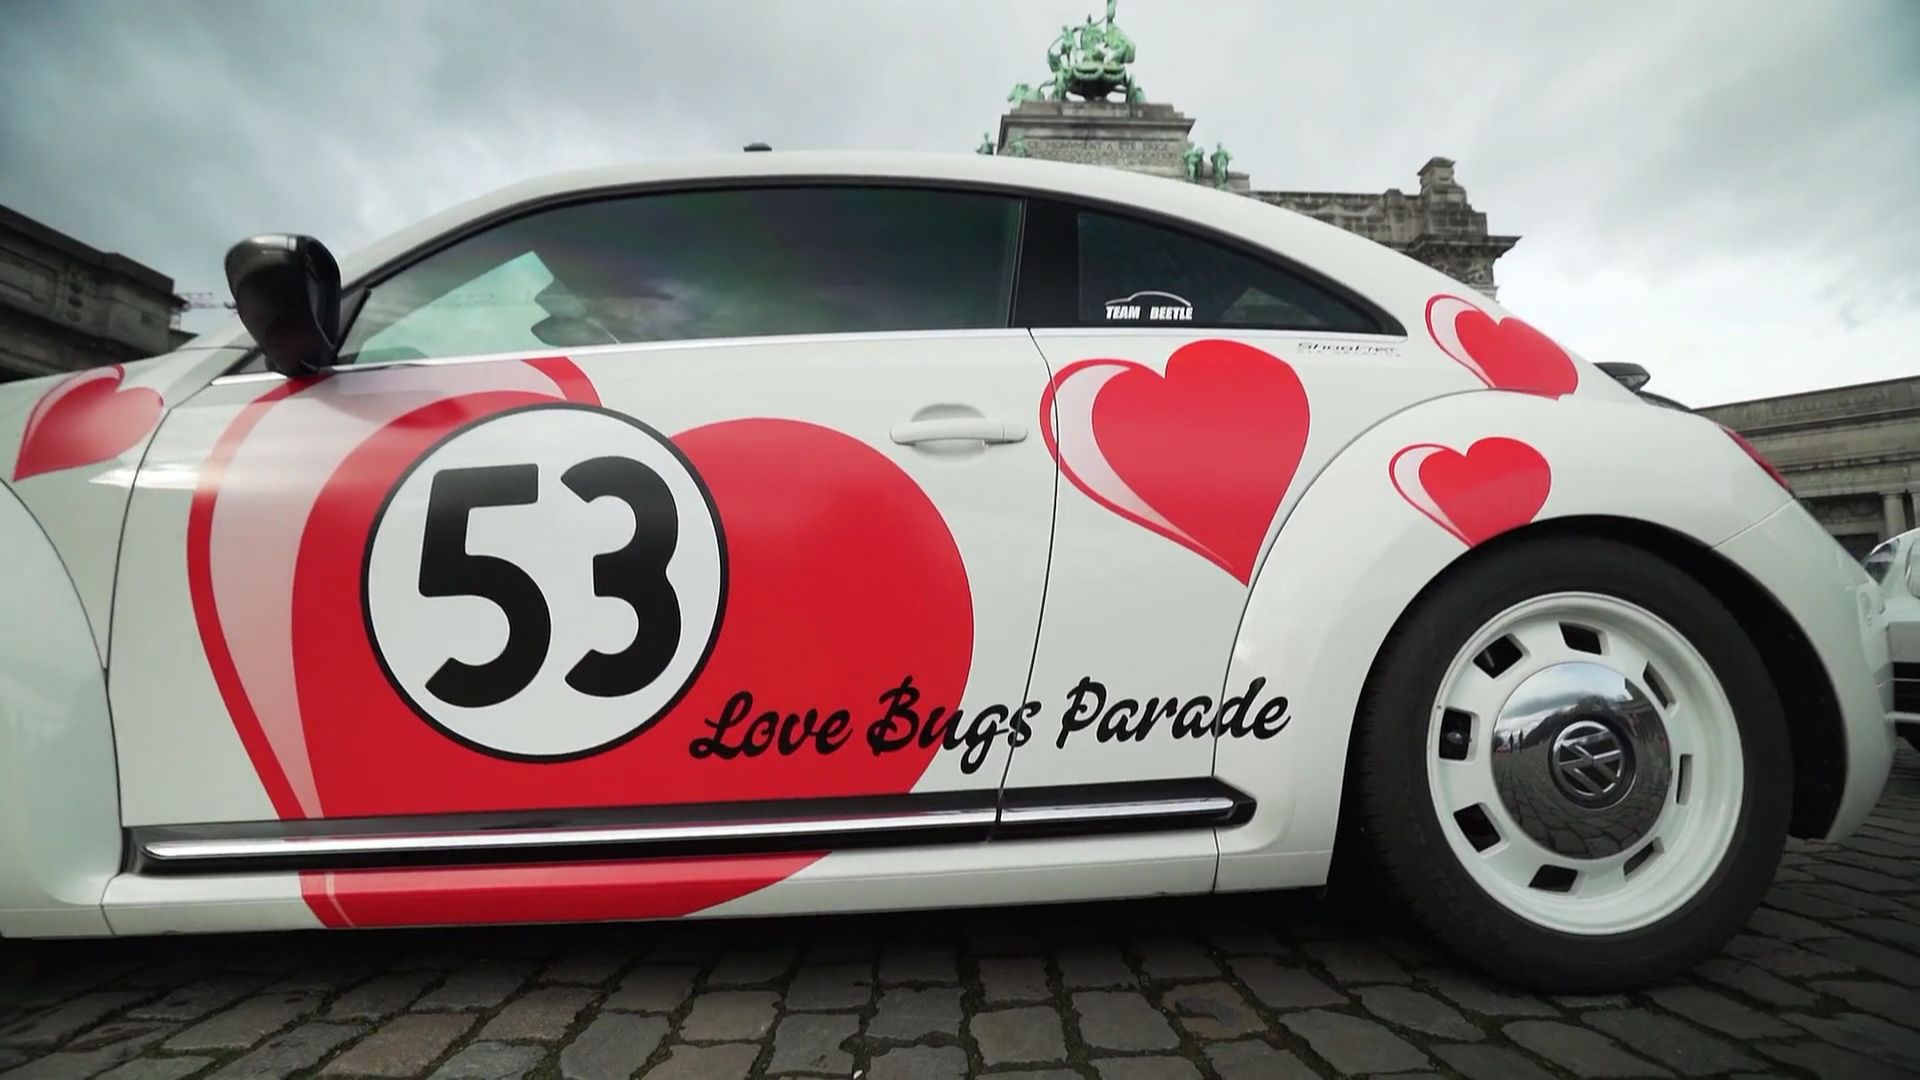 Love bug parade